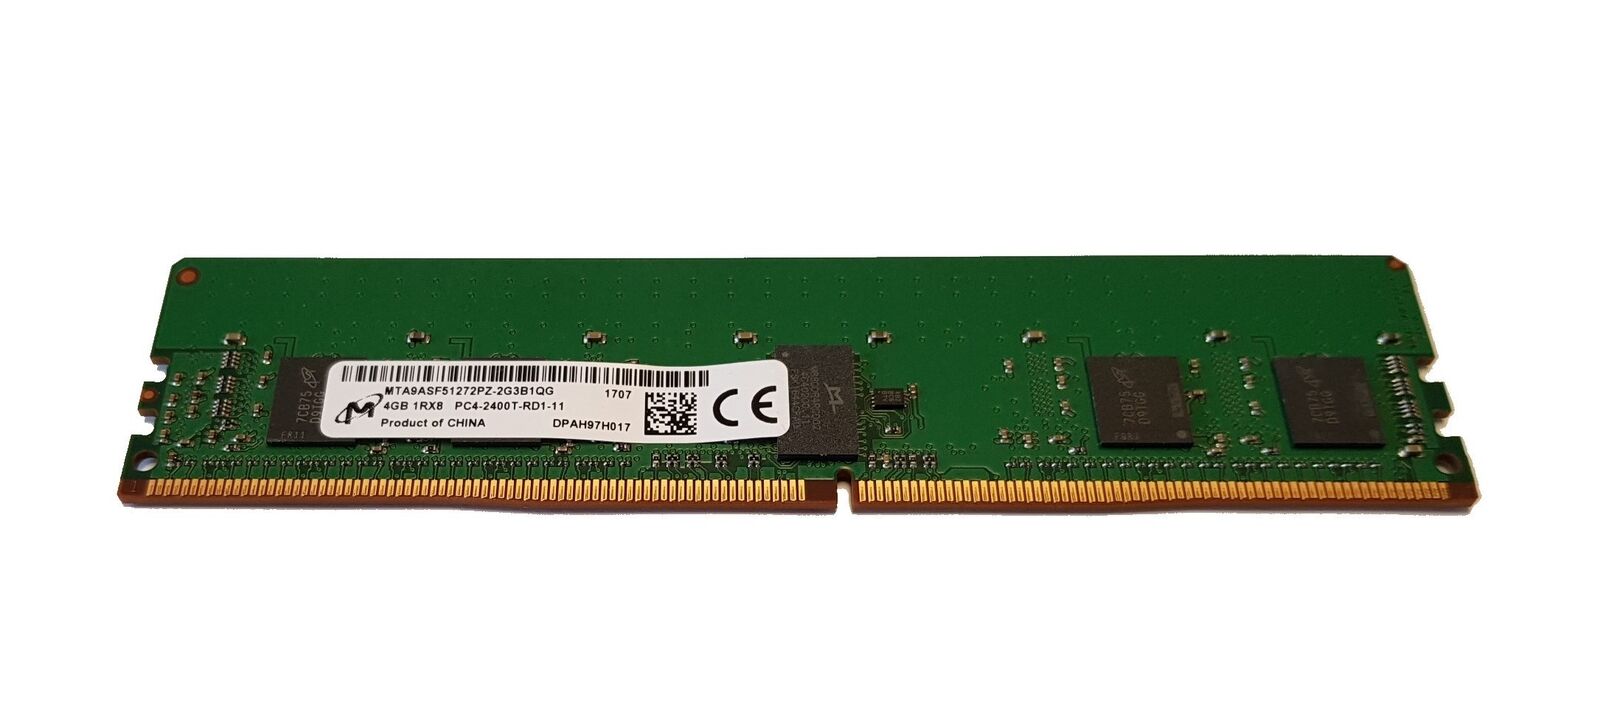 Micron 4GB PC4-2400T DDR4 288pin SDRAM Server Memory MTA9ASF51272PZ-2G3B1QG